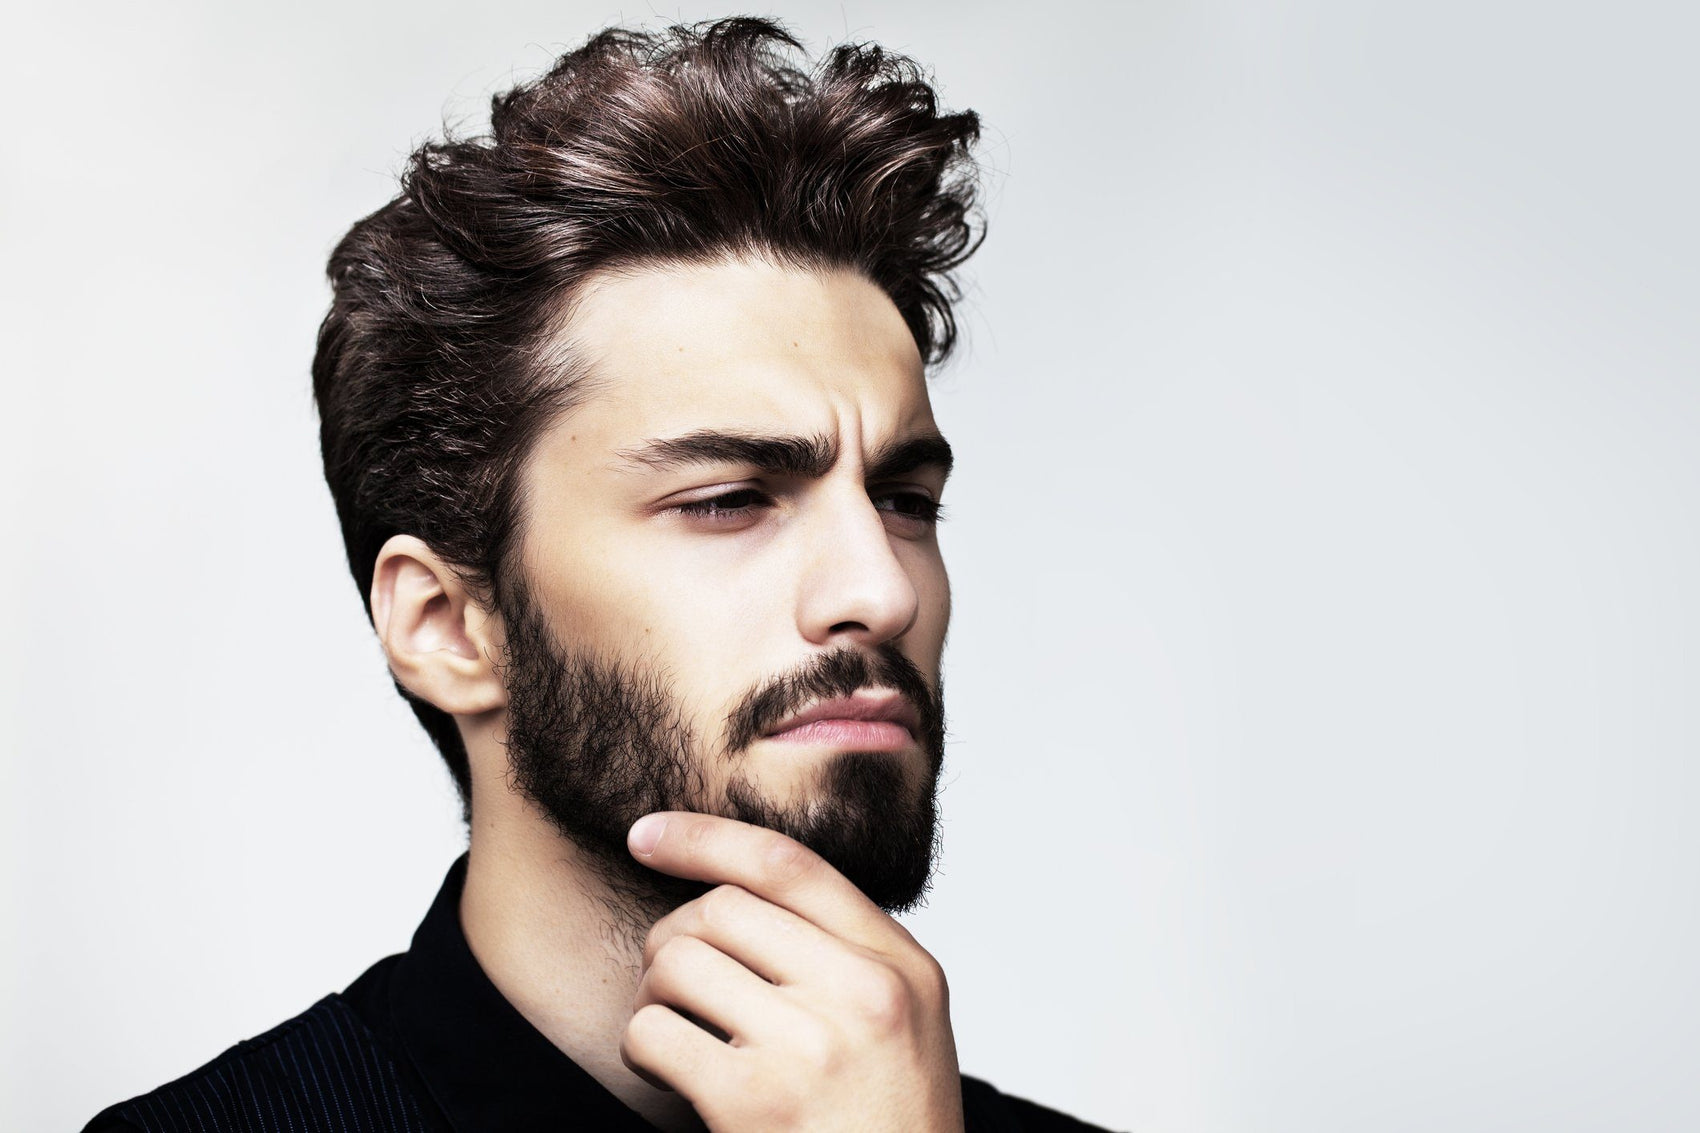 Simple grooming tips for men - beautyhair.co.uk